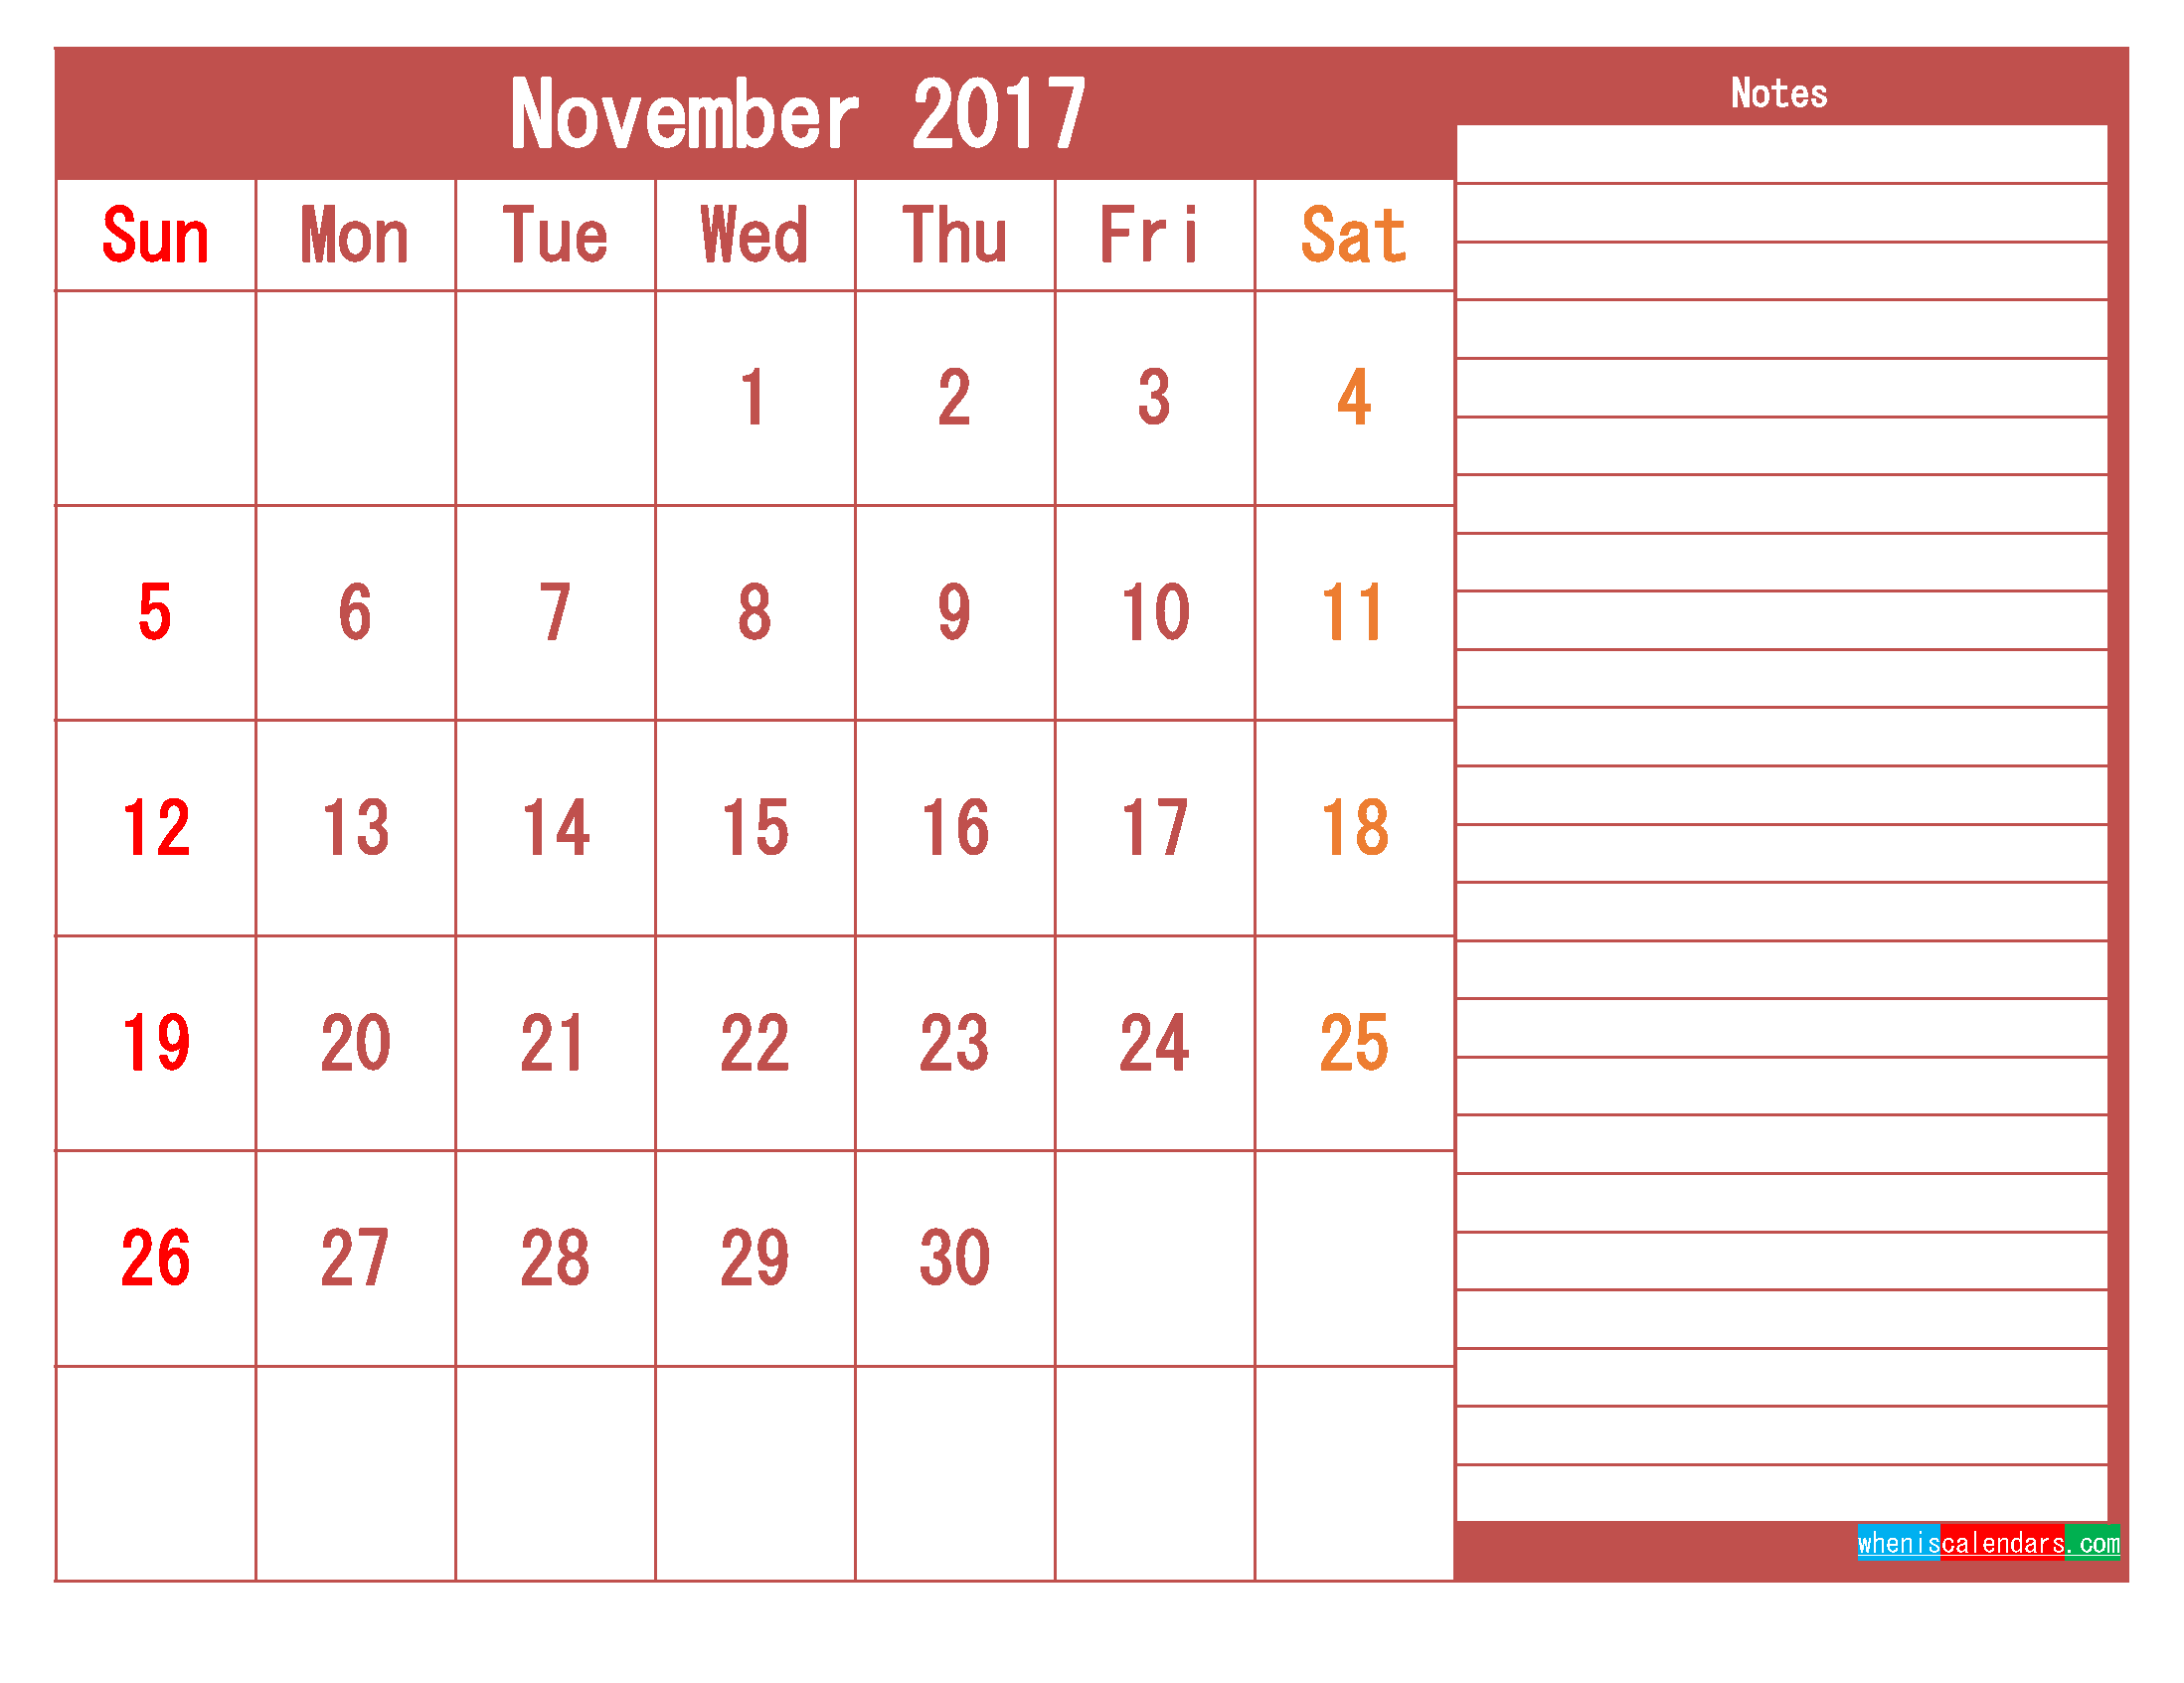 November 2017 Printable Calendar Template As PDF